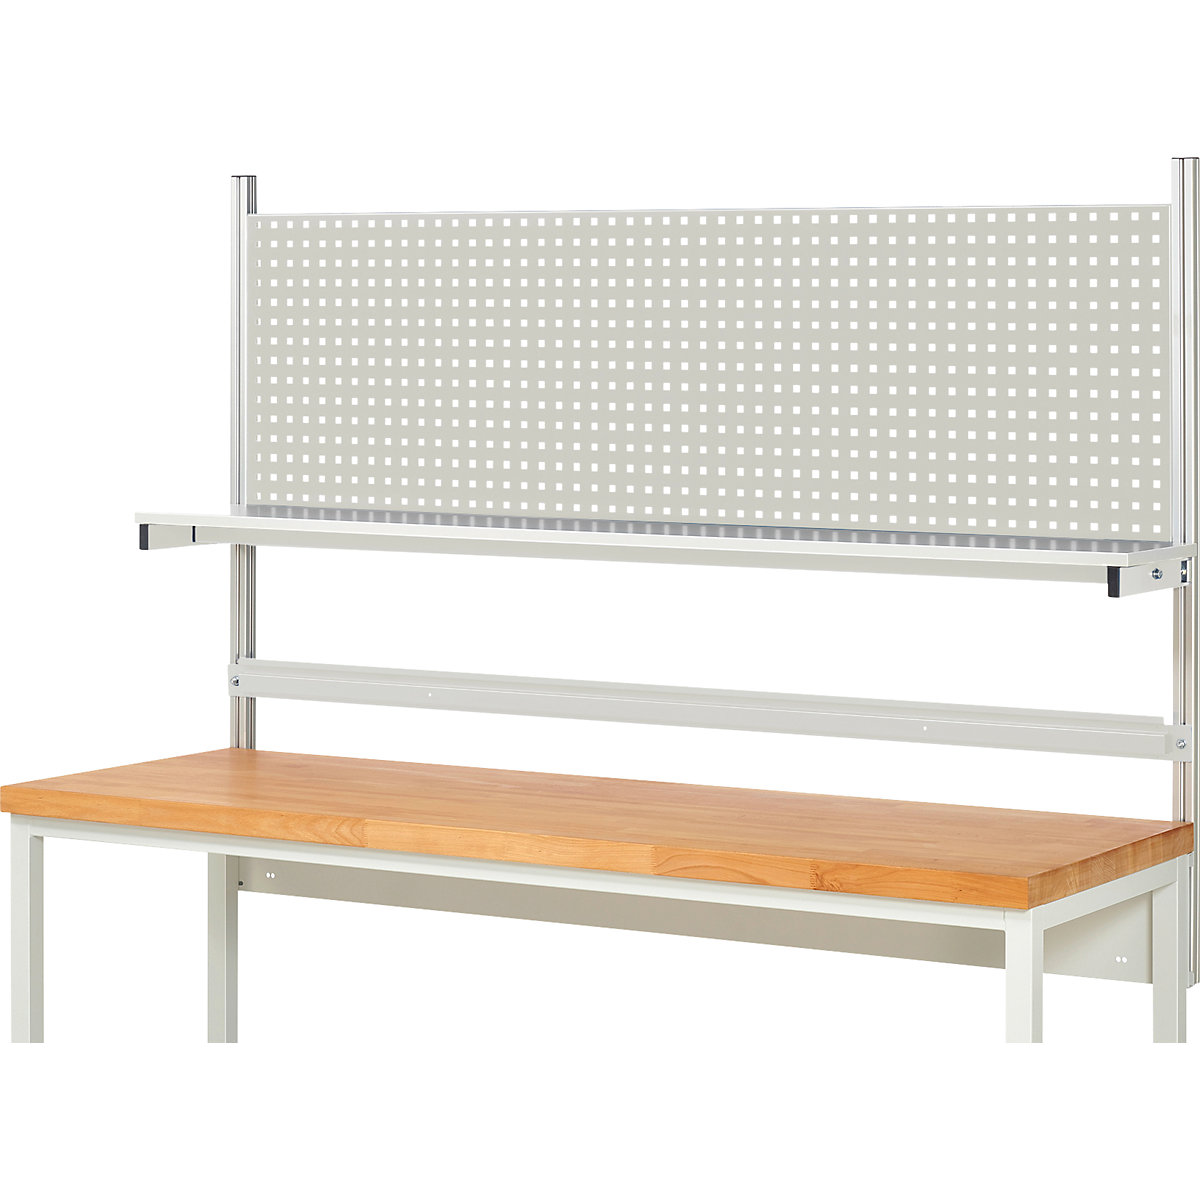 Complete modular system set 1 – RAU, for workbench, width 2000 mm